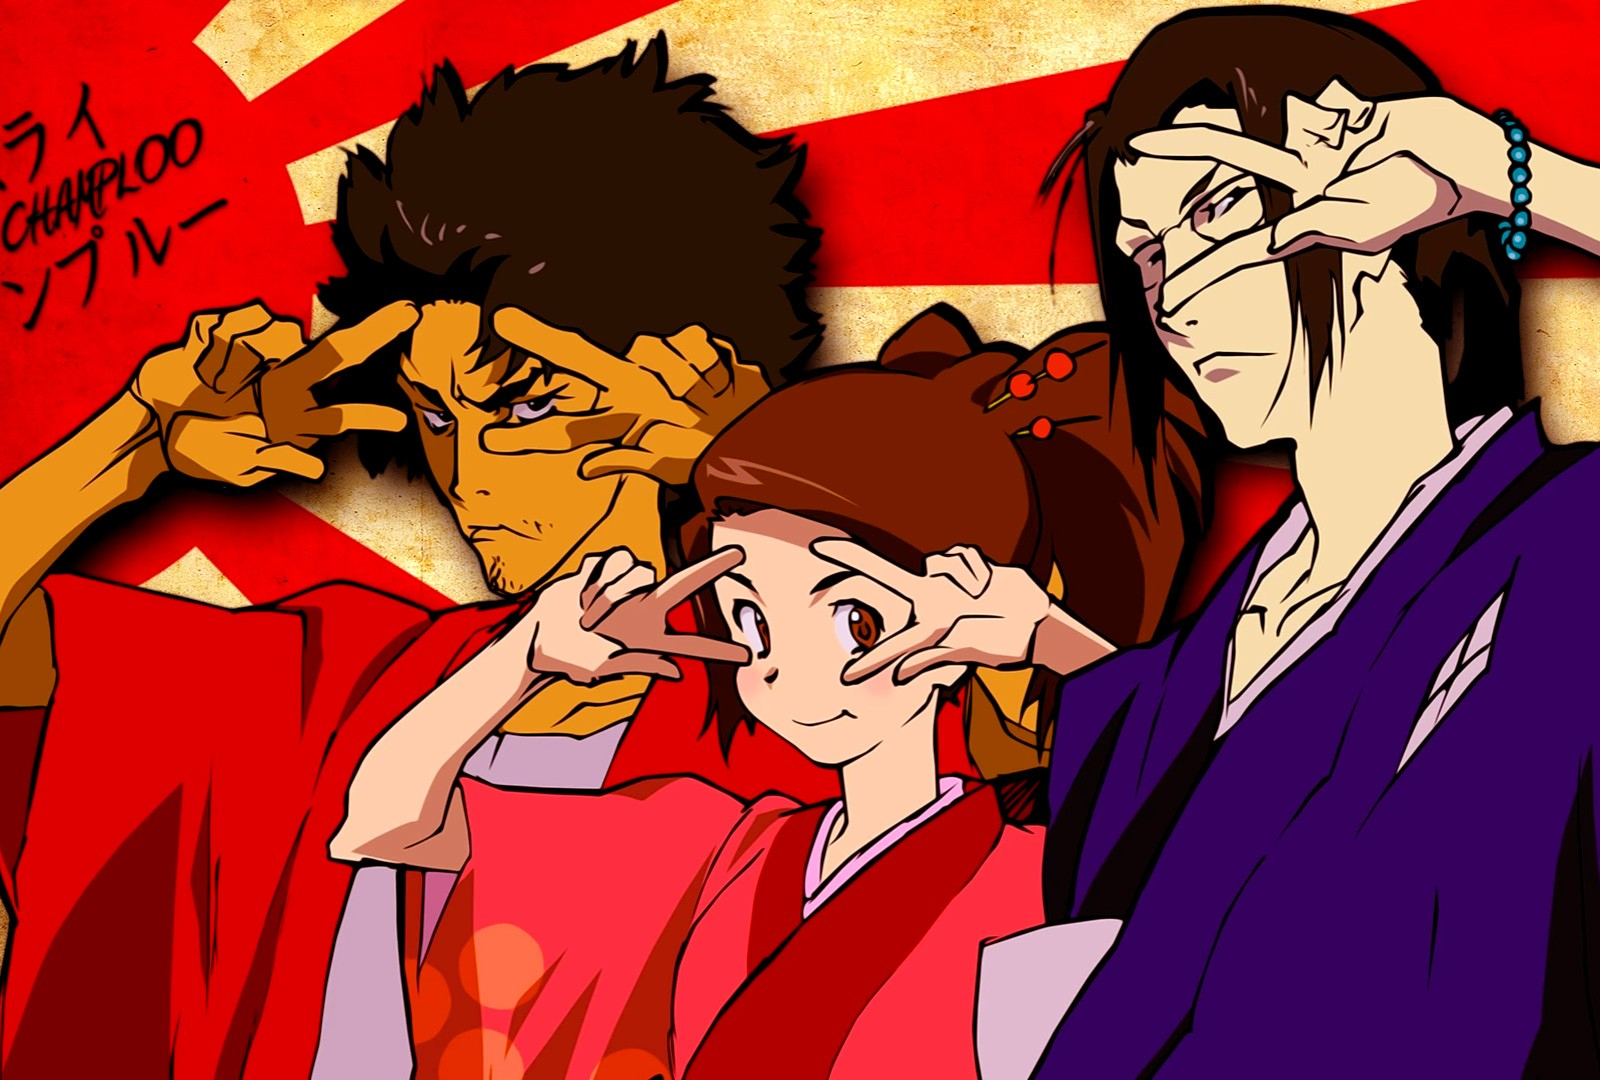 Desktop Wallpaper Jin Mugen Fuu Of Samurai Champloo Anime Hd Image Picture Background S8jri4